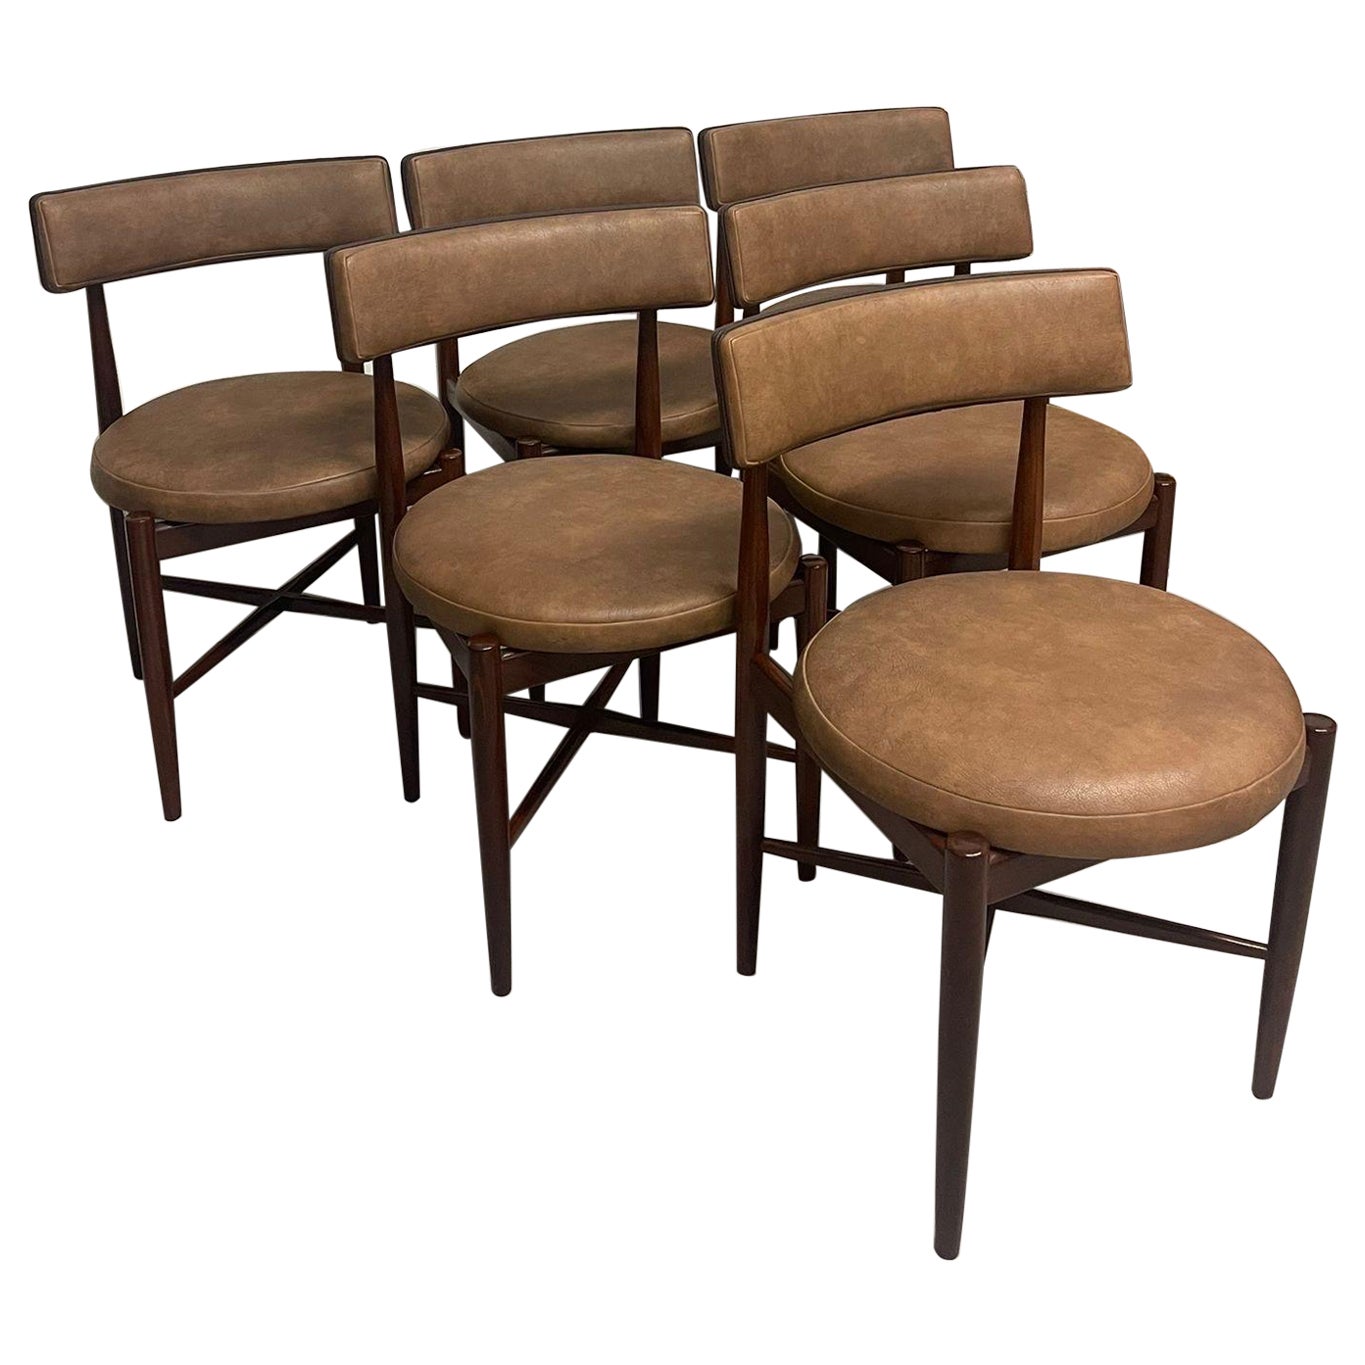 Set of 6 Vintage English Mid Century Modern G-Plan Dining Chairs.